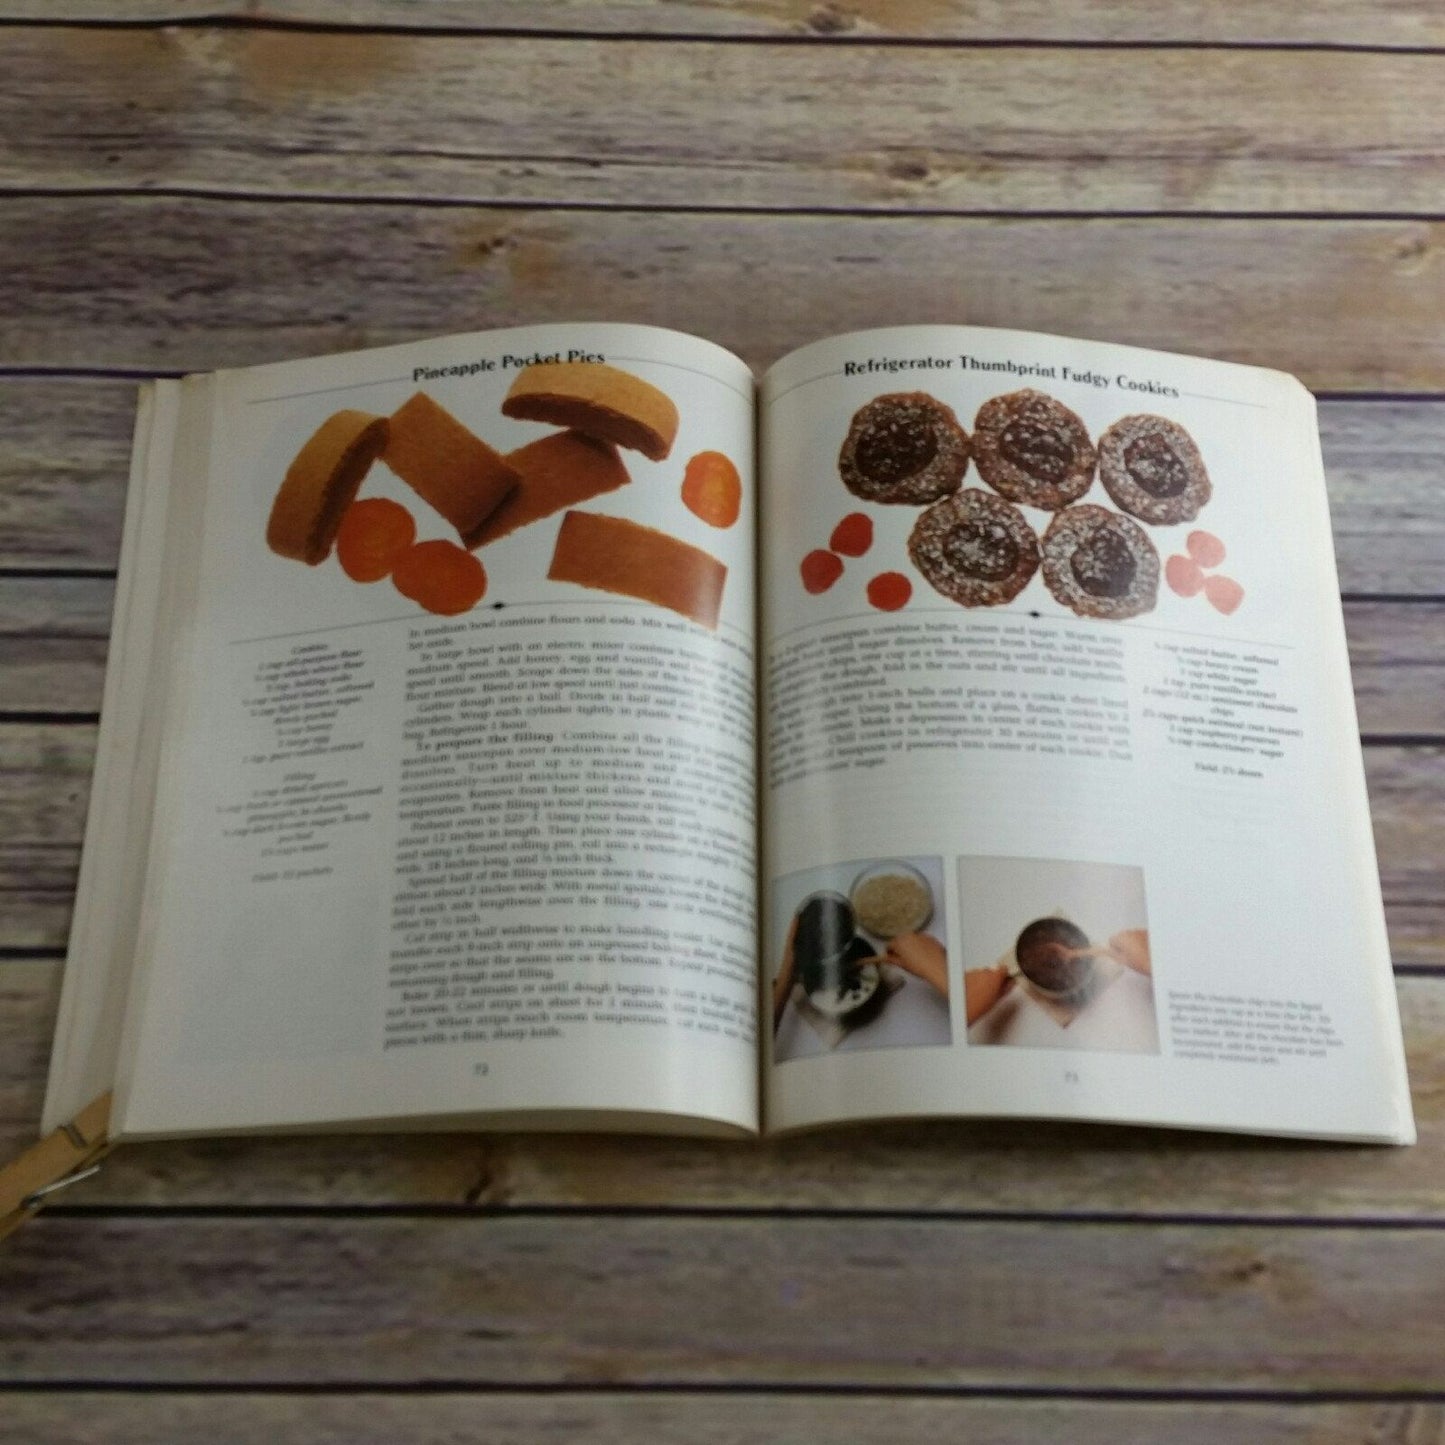 Vintage Cookbook Mrs Fields Cookie Book 100 Recipes 1992 Debbie Fields Time Life Books Paperback Book